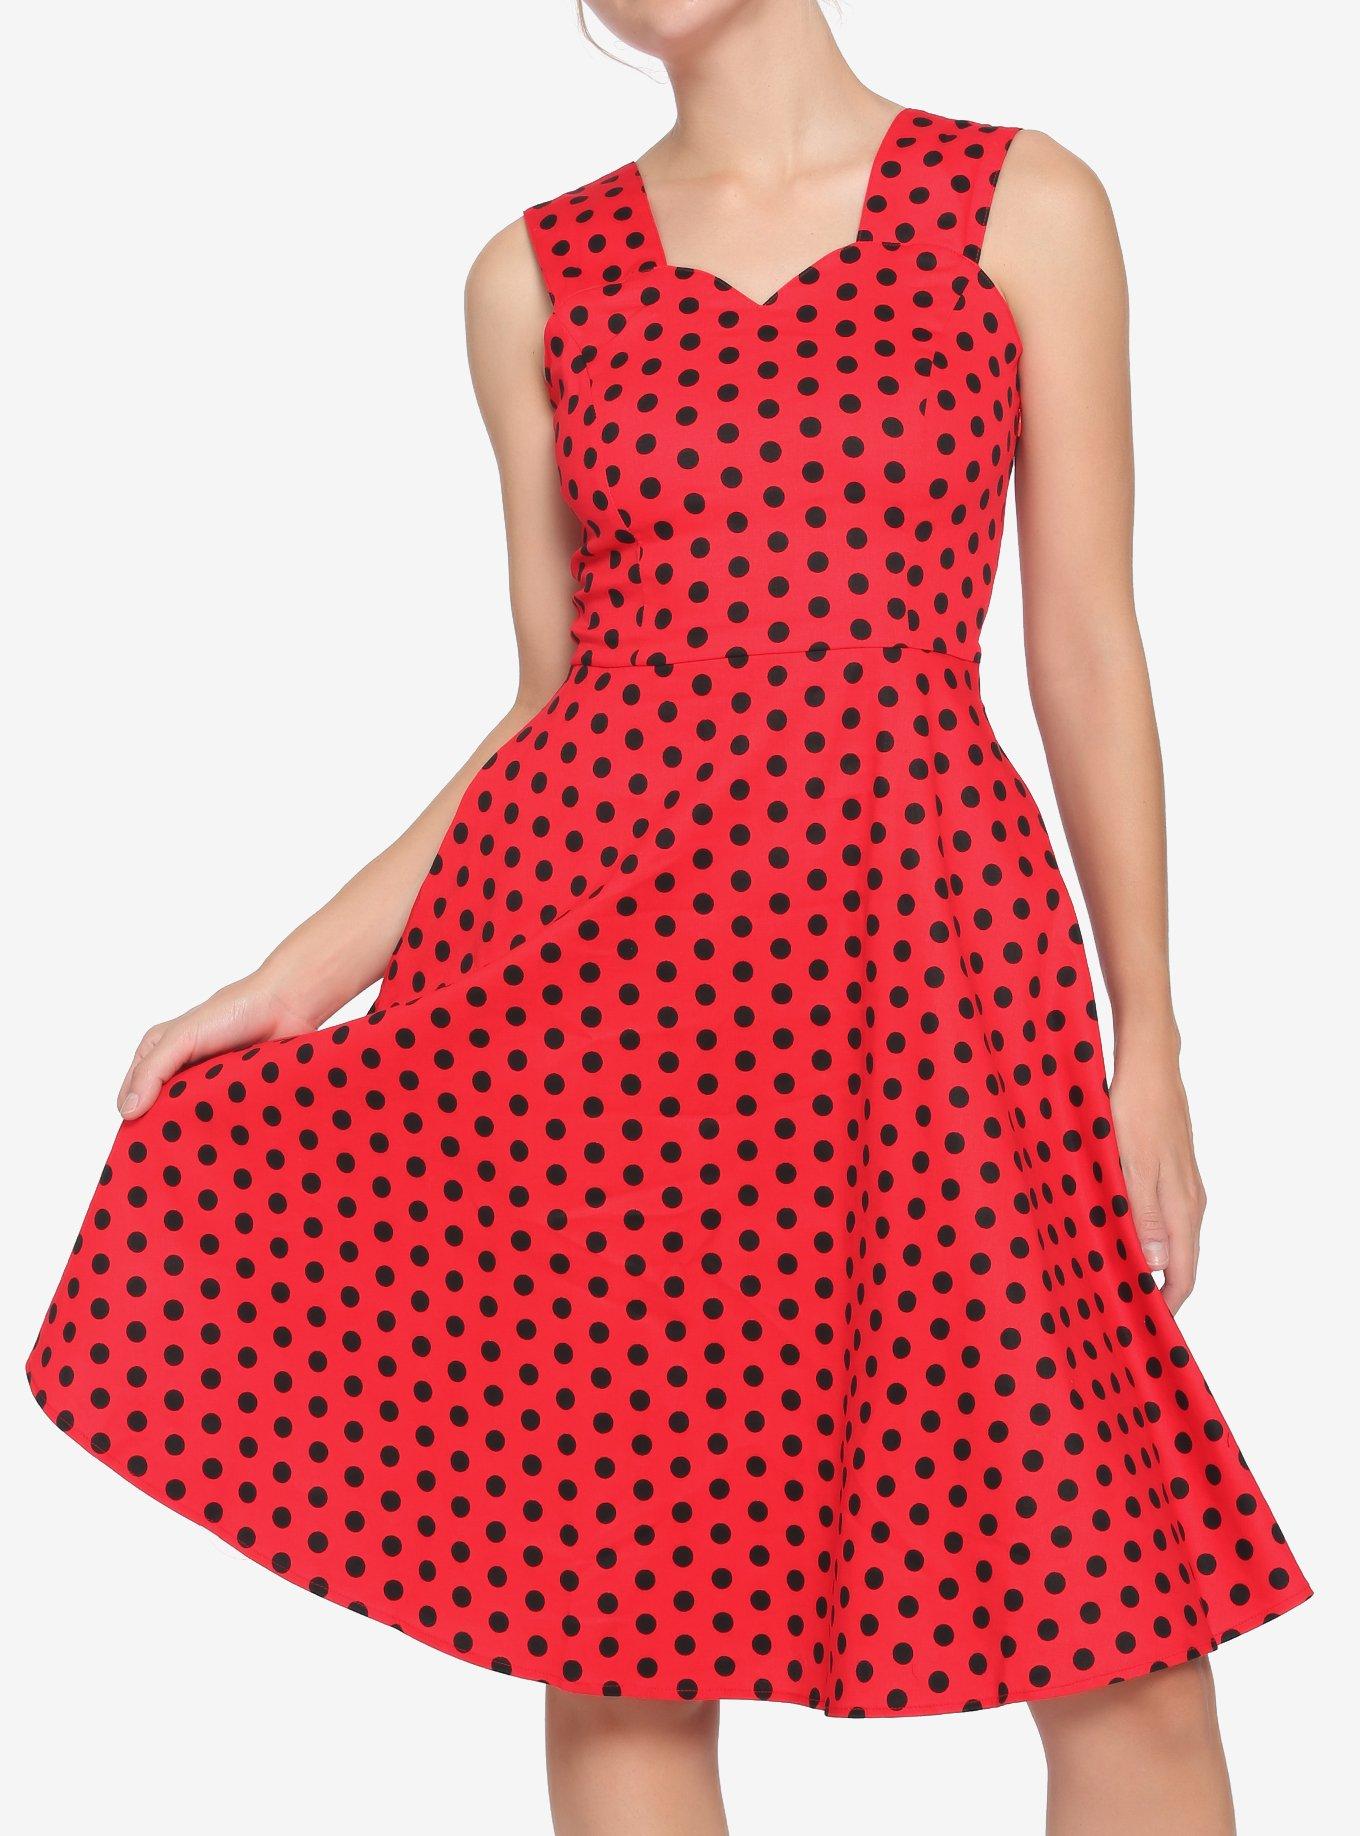 red and black polka dot dress